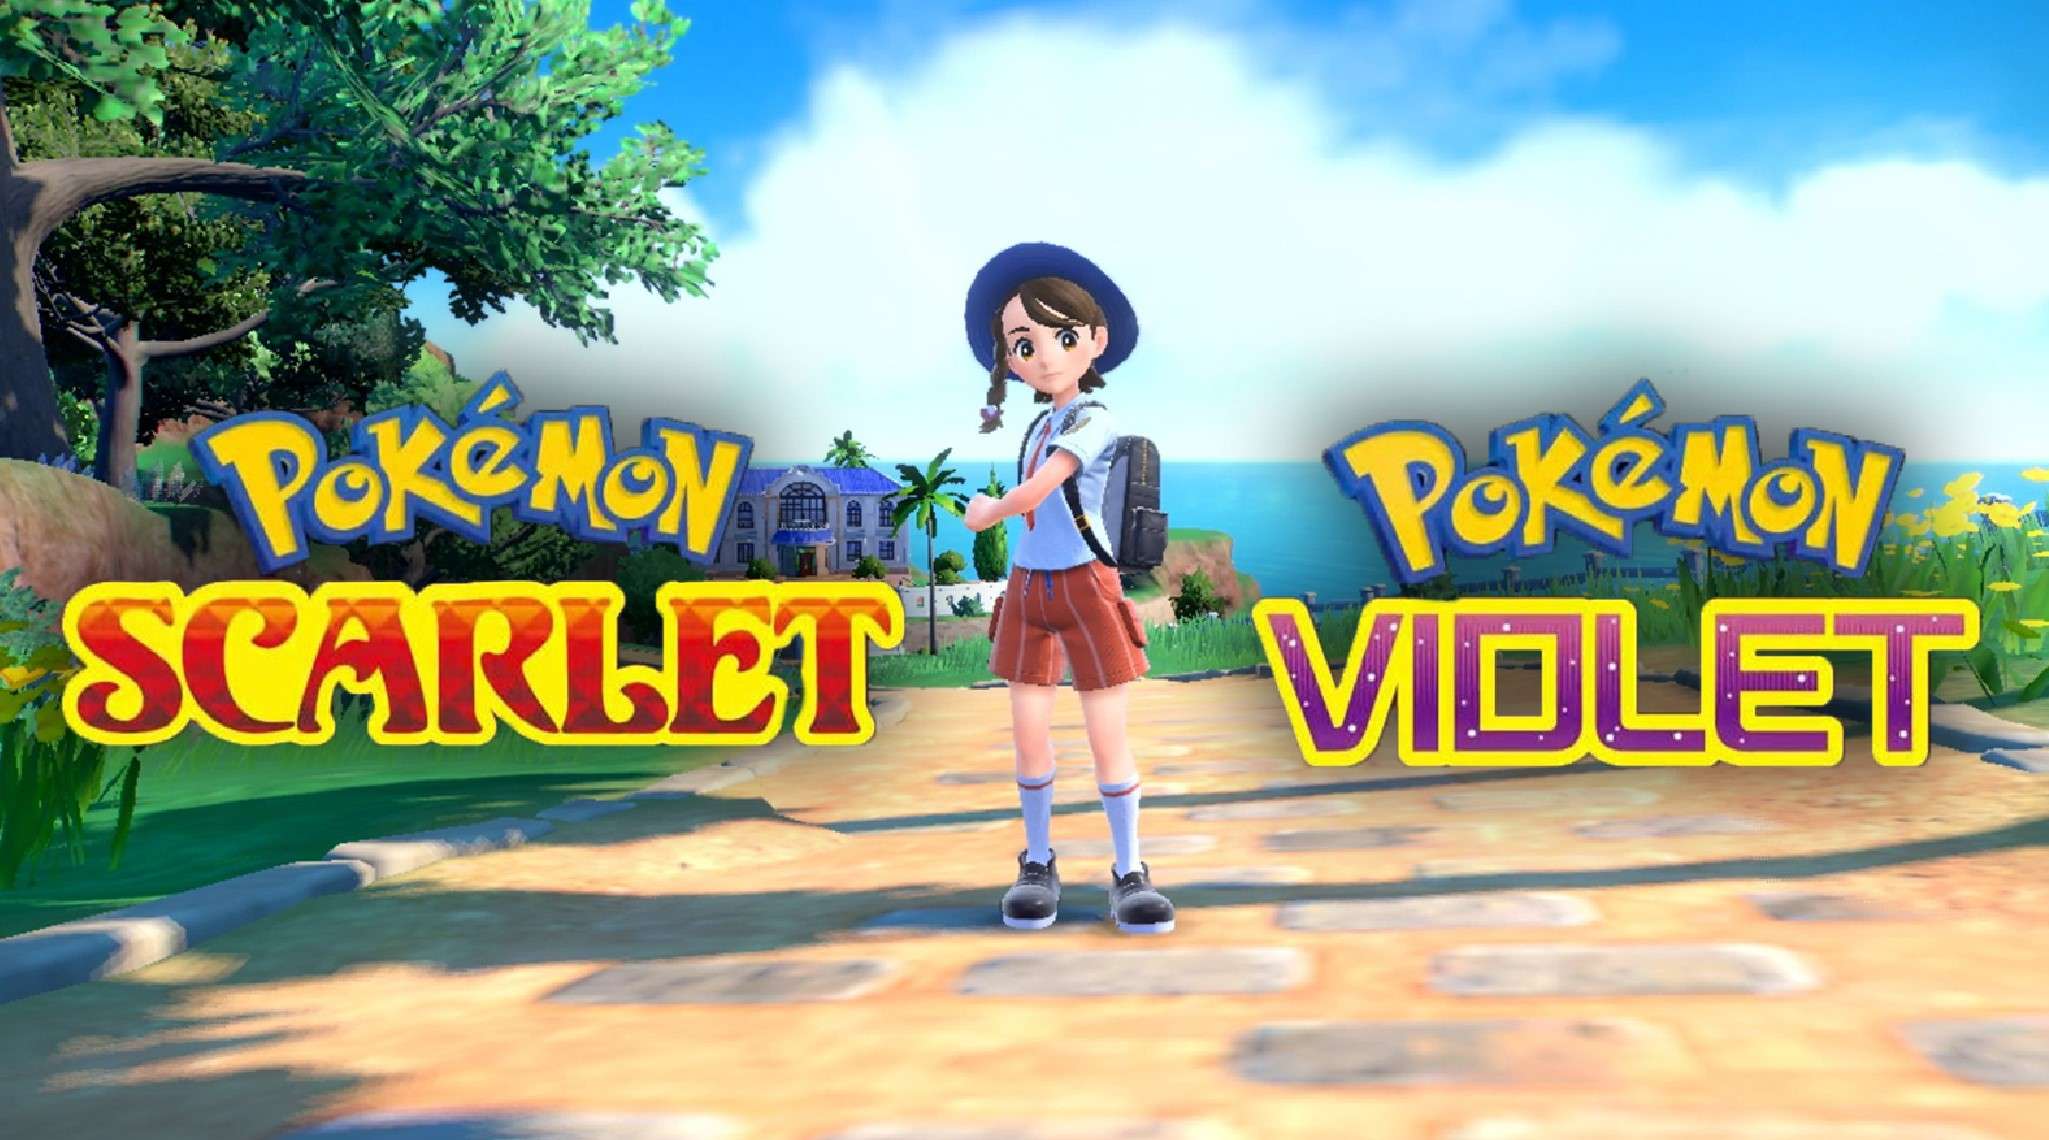 Pokemon Scarlet Violet gameplay